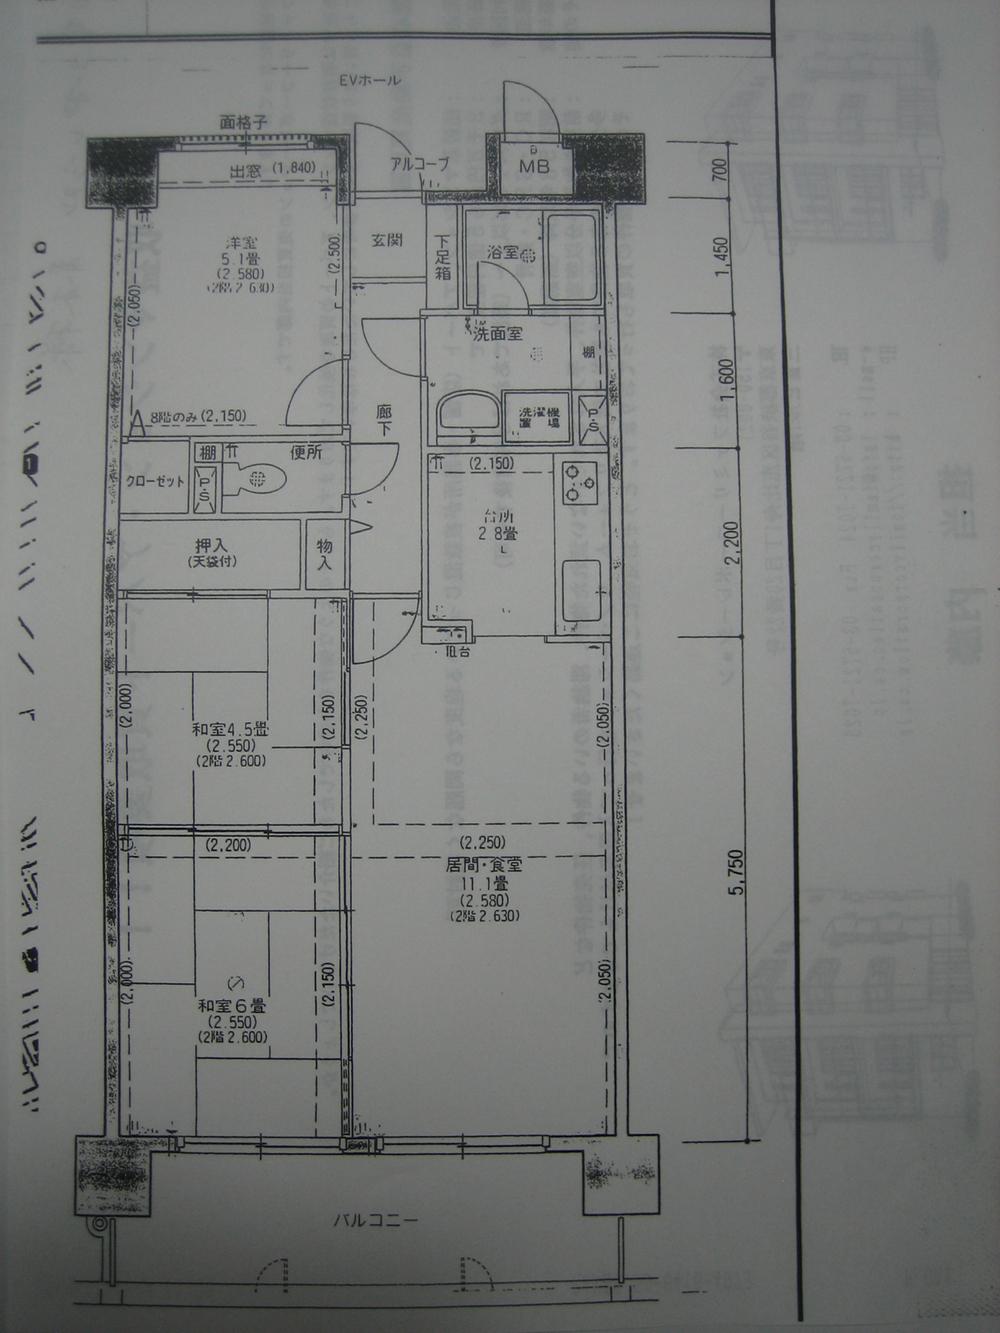 Floor plan. 14LDK, Price 8 million yen, Footprint 66.6 sq m , Balcony area 9.86 sq m